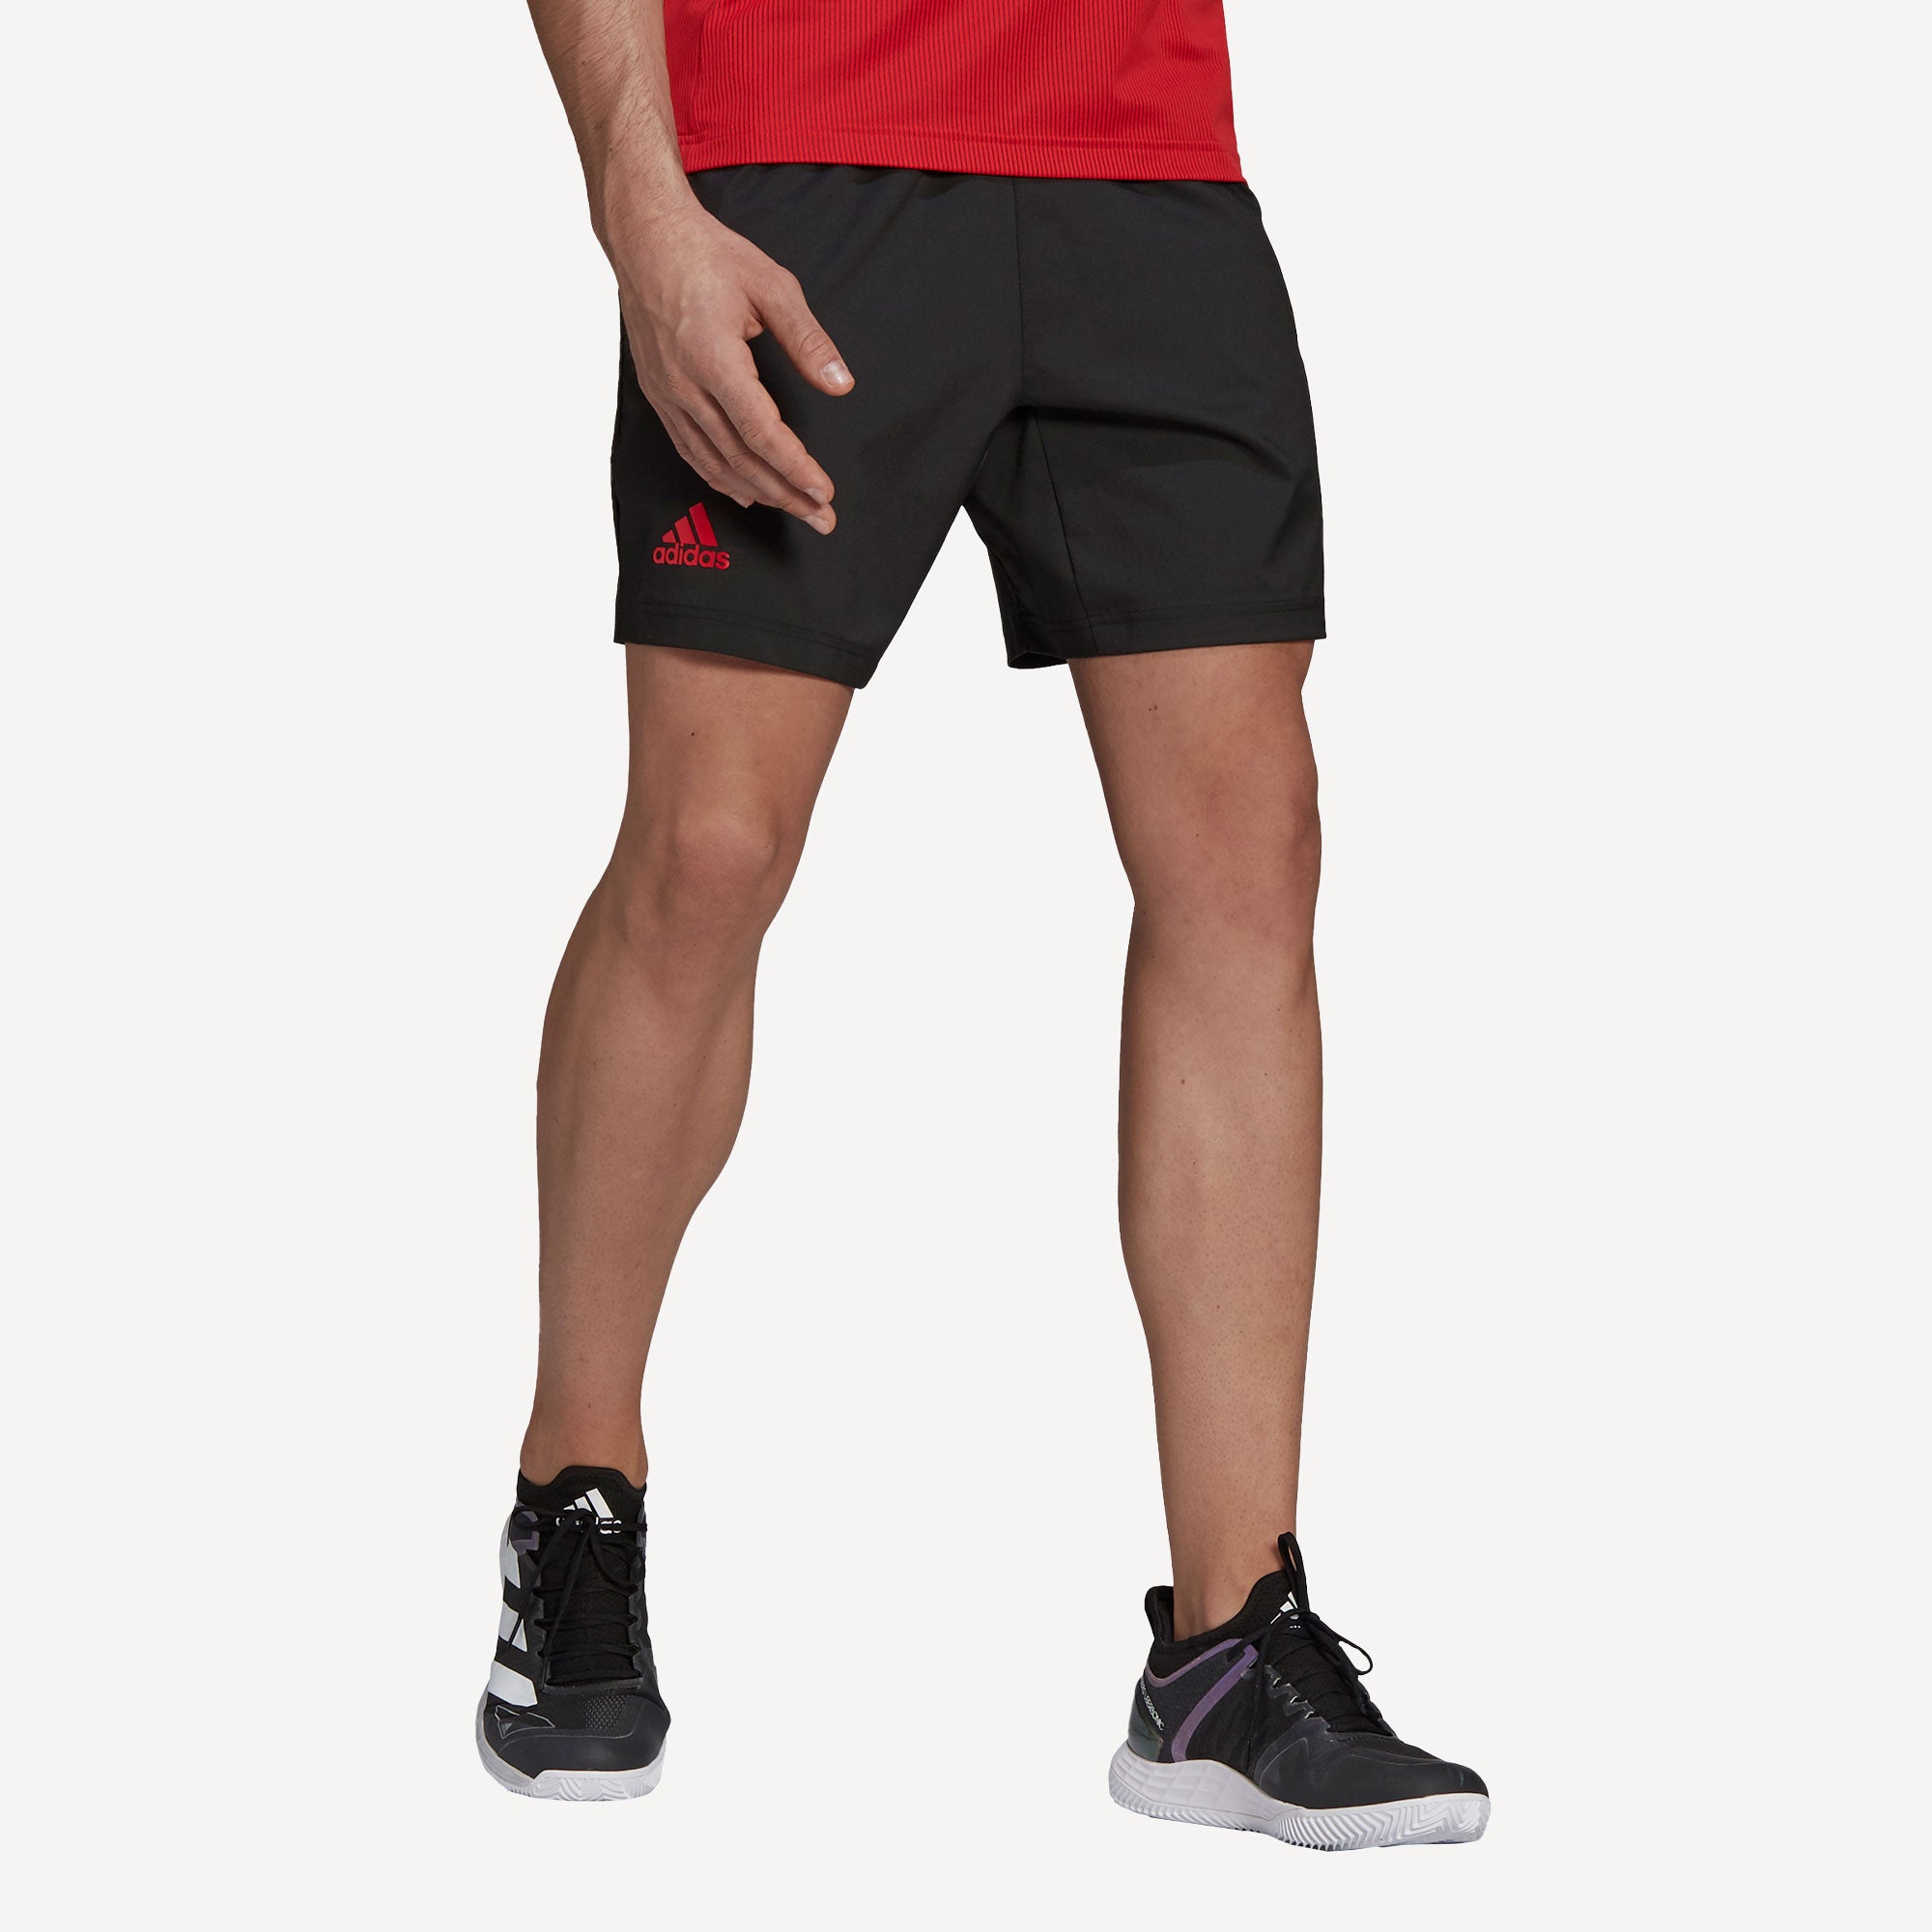 adidas Ergo Primeblue Men's 7-Inch Tennis Shorts Black (1)